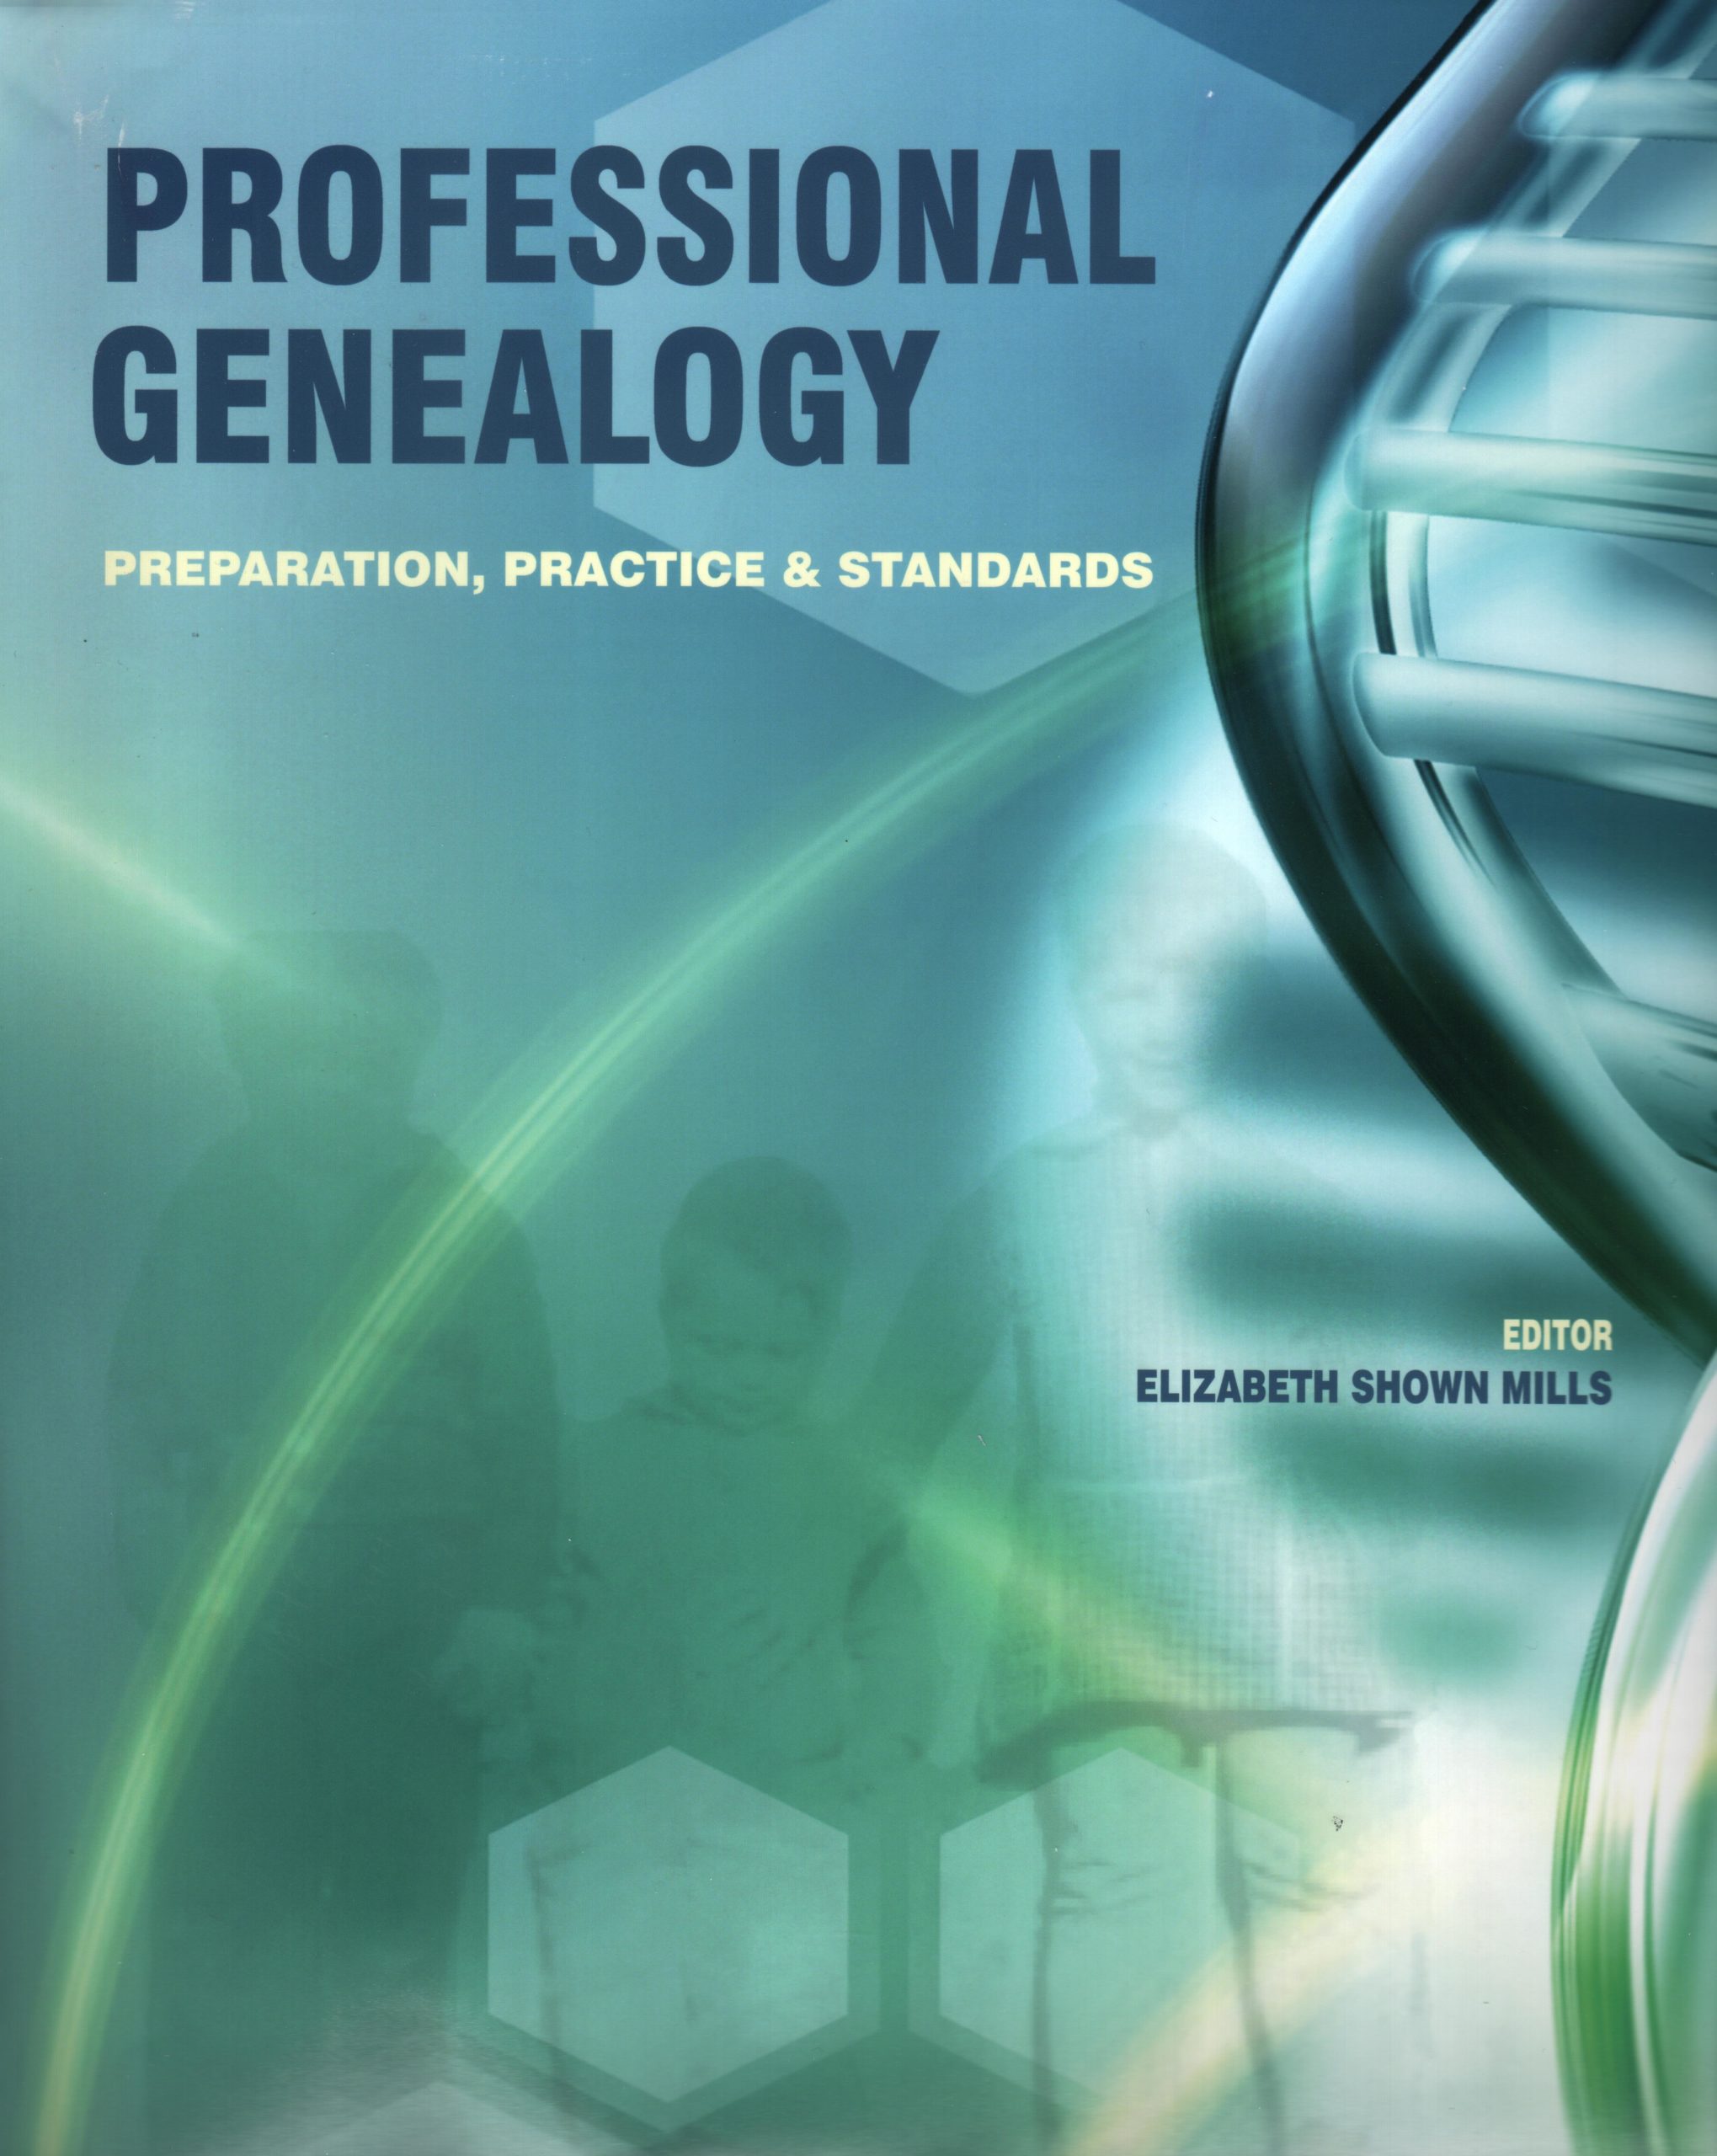 Professional Genealogy: Preparation, Practice & Standards